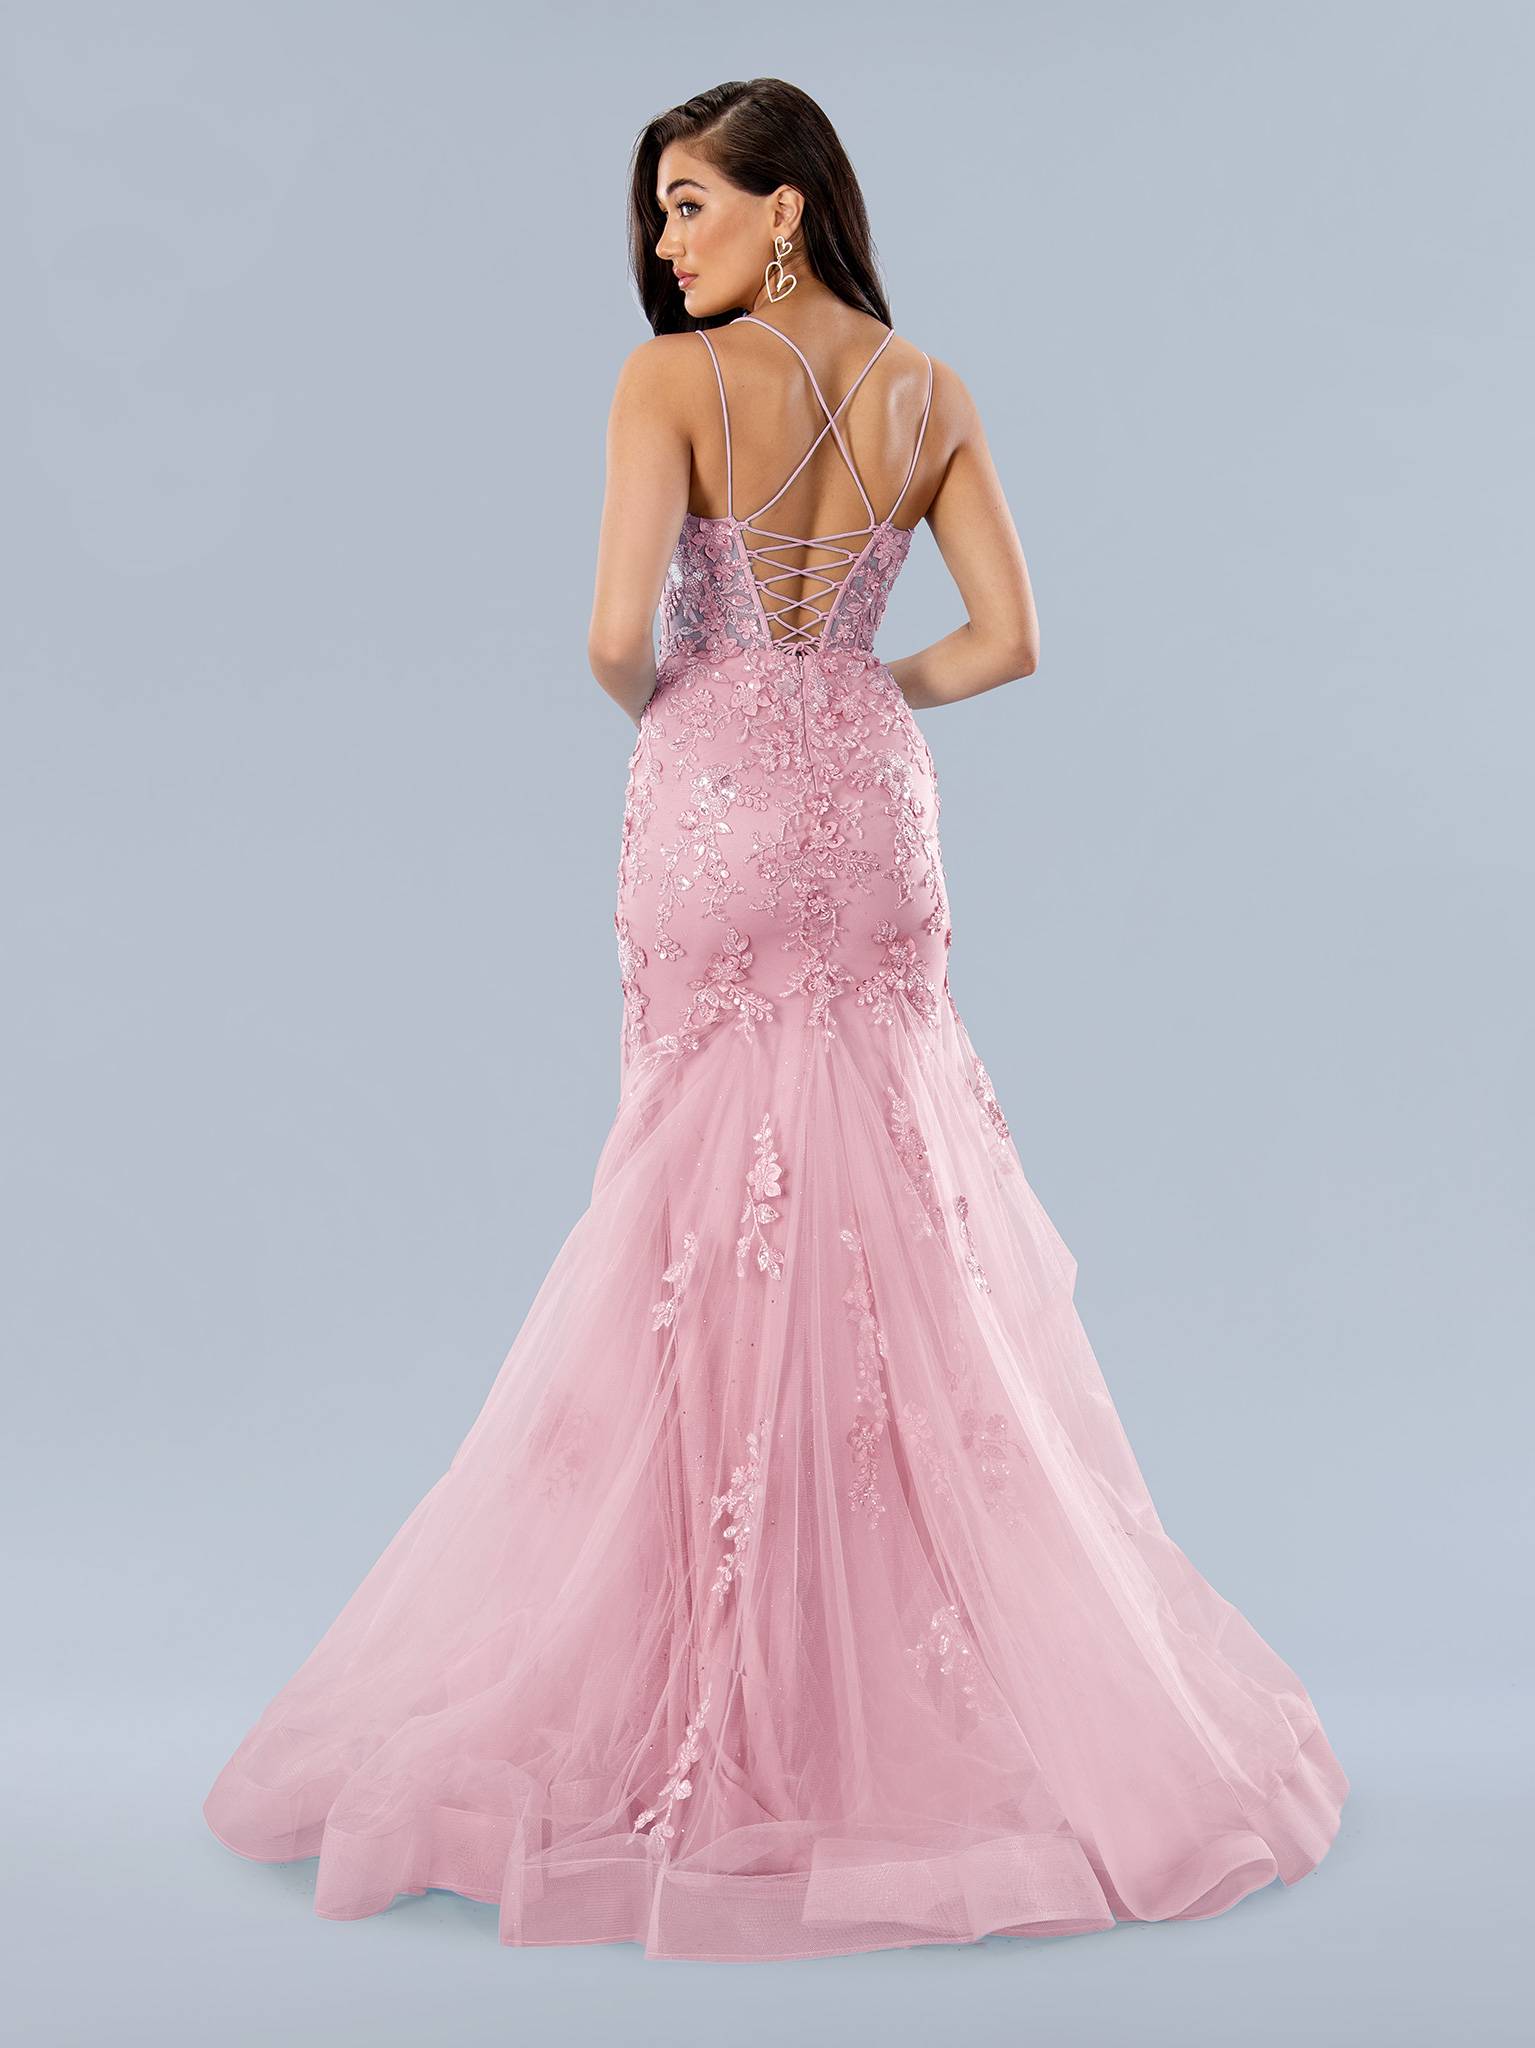 Llella Mermaid Hot Pink Beaded Corset Prom Dress Tight Formal Dresses –  LLELLA